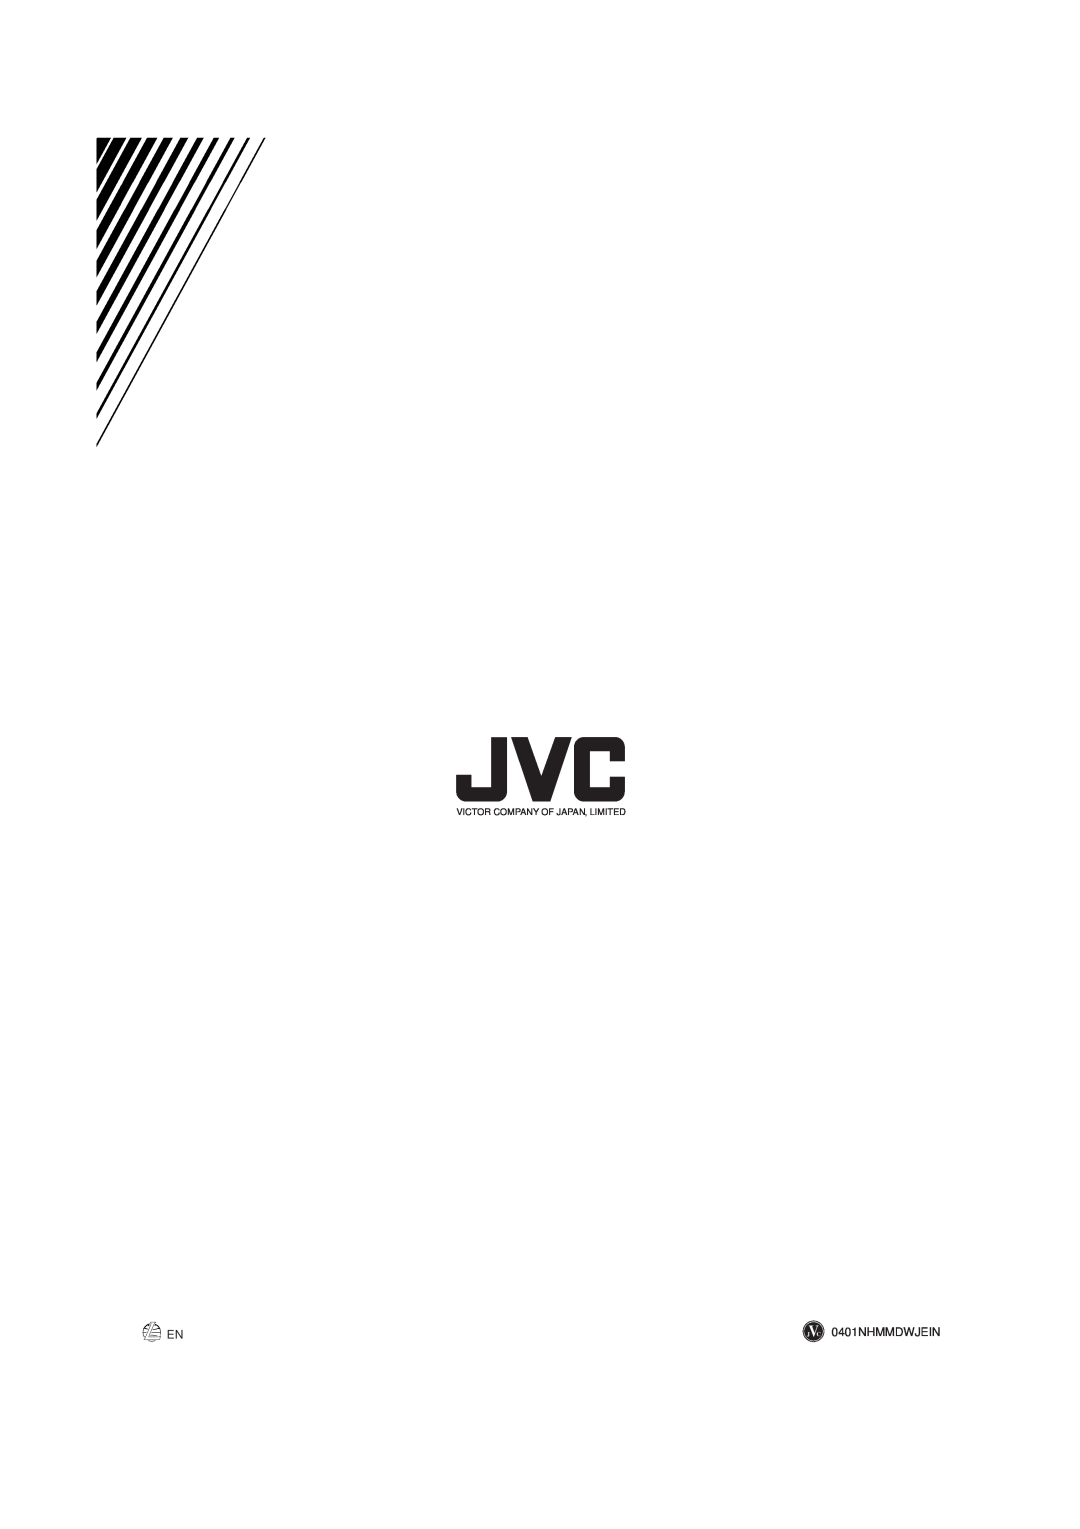 JVC RX-8010RBK, RX-8012RSL manual JVC 0401NHMMDWJEIN, Victor Company Of Japan, Limited 